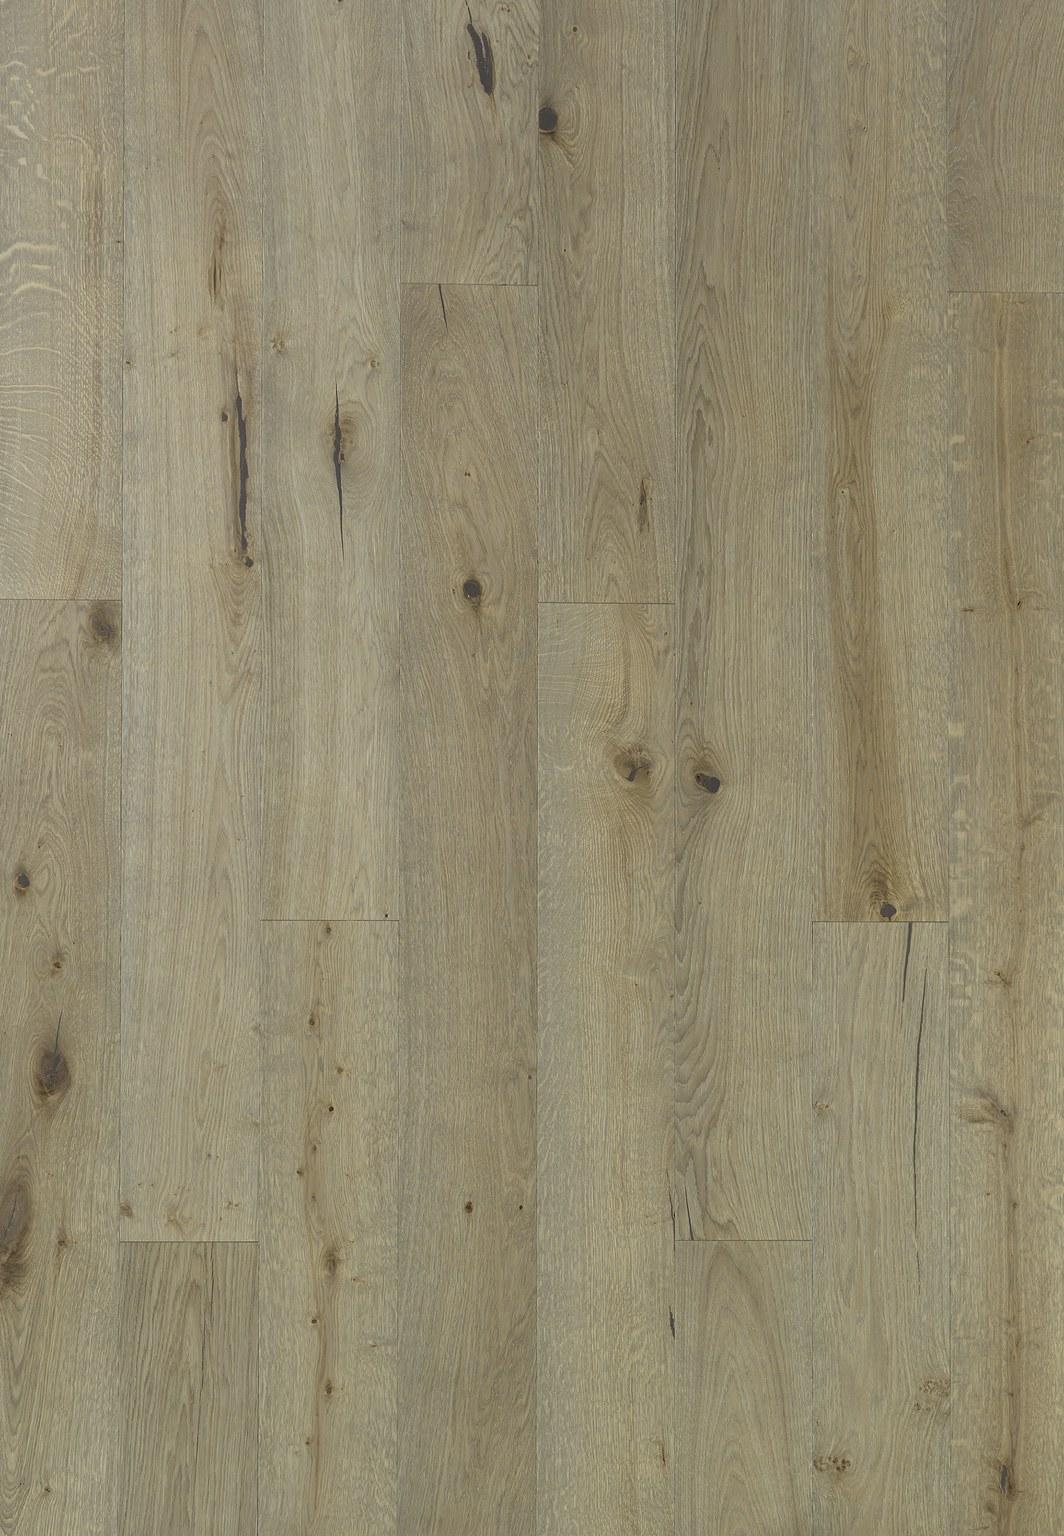 Timberwise Parketti Lankkuparketti Puulattia Wooden Floor Parquet Plank Tammi Oak Vintage Suomu 2D1